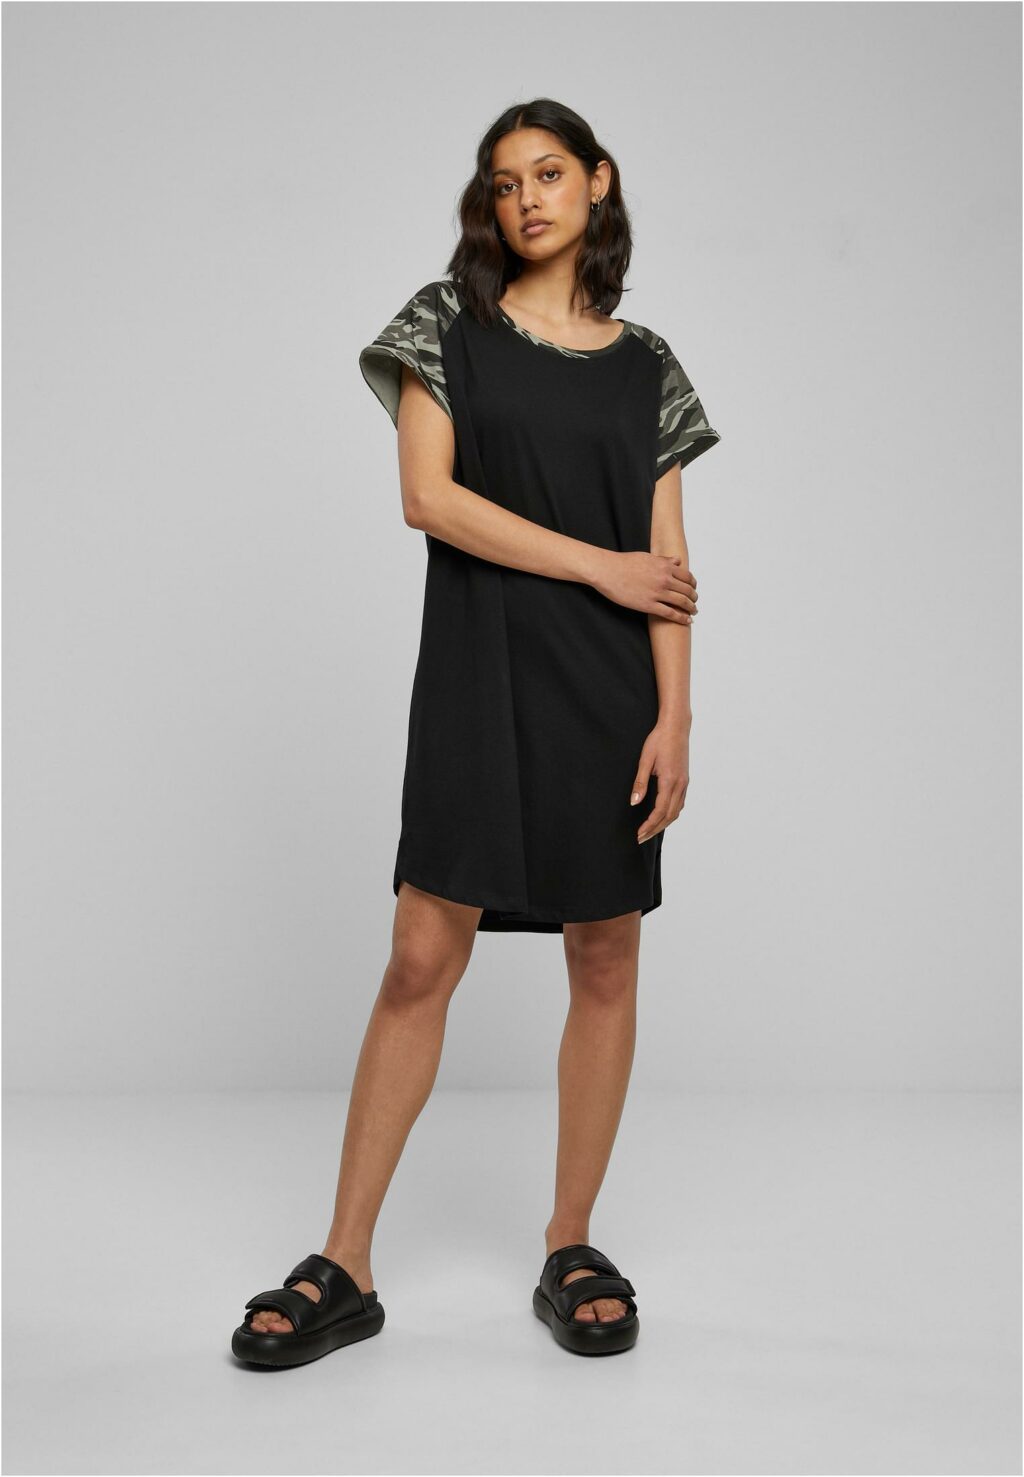 Urban Classics Ladies Contrast Raglan Tee Dress black/darkcamo TB5030